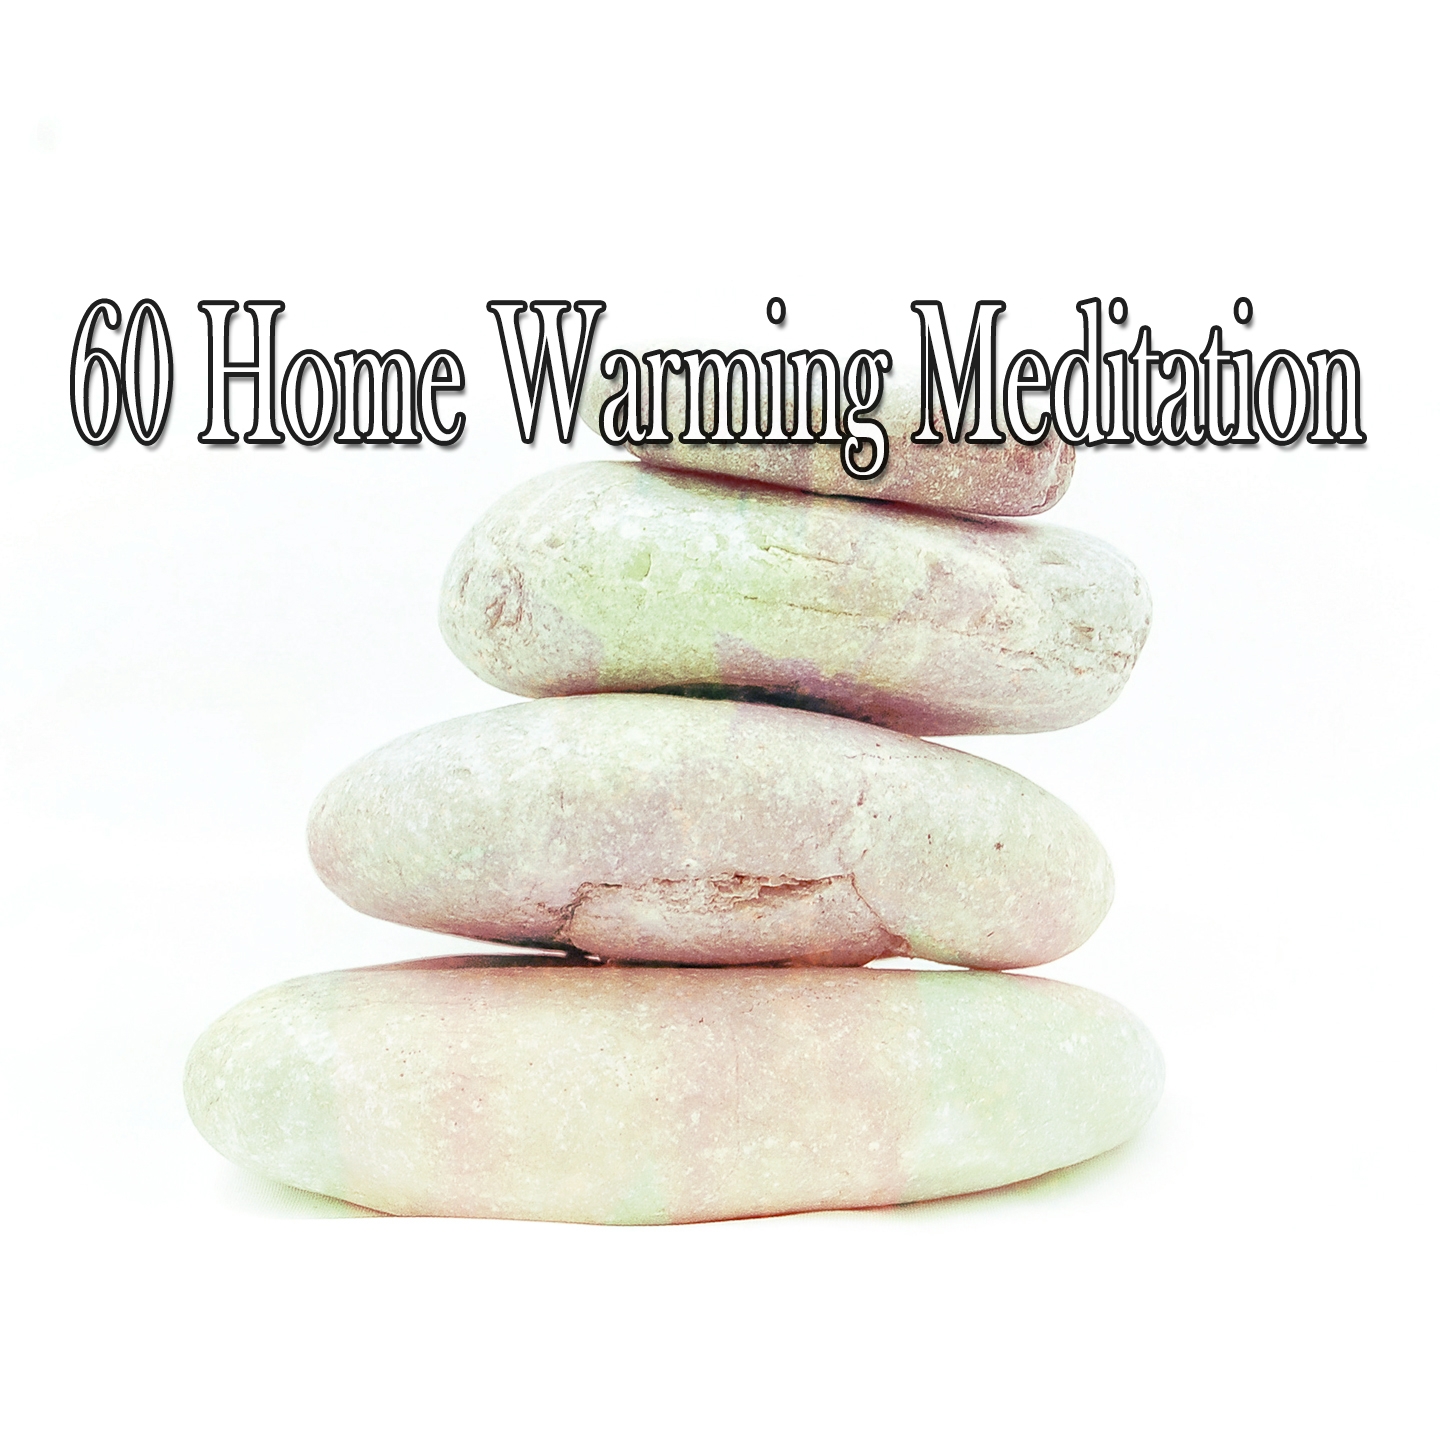 60 Home Warming Meditation